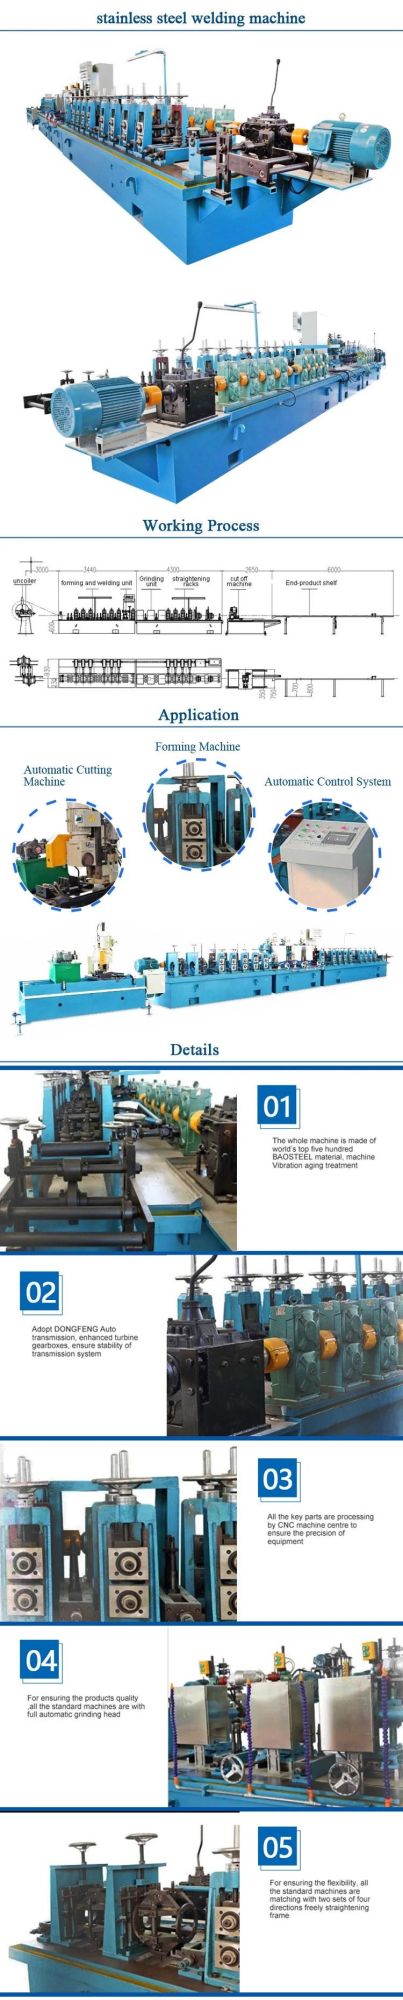 Customized Product Seam Stainless Steel Tube Welding Machine